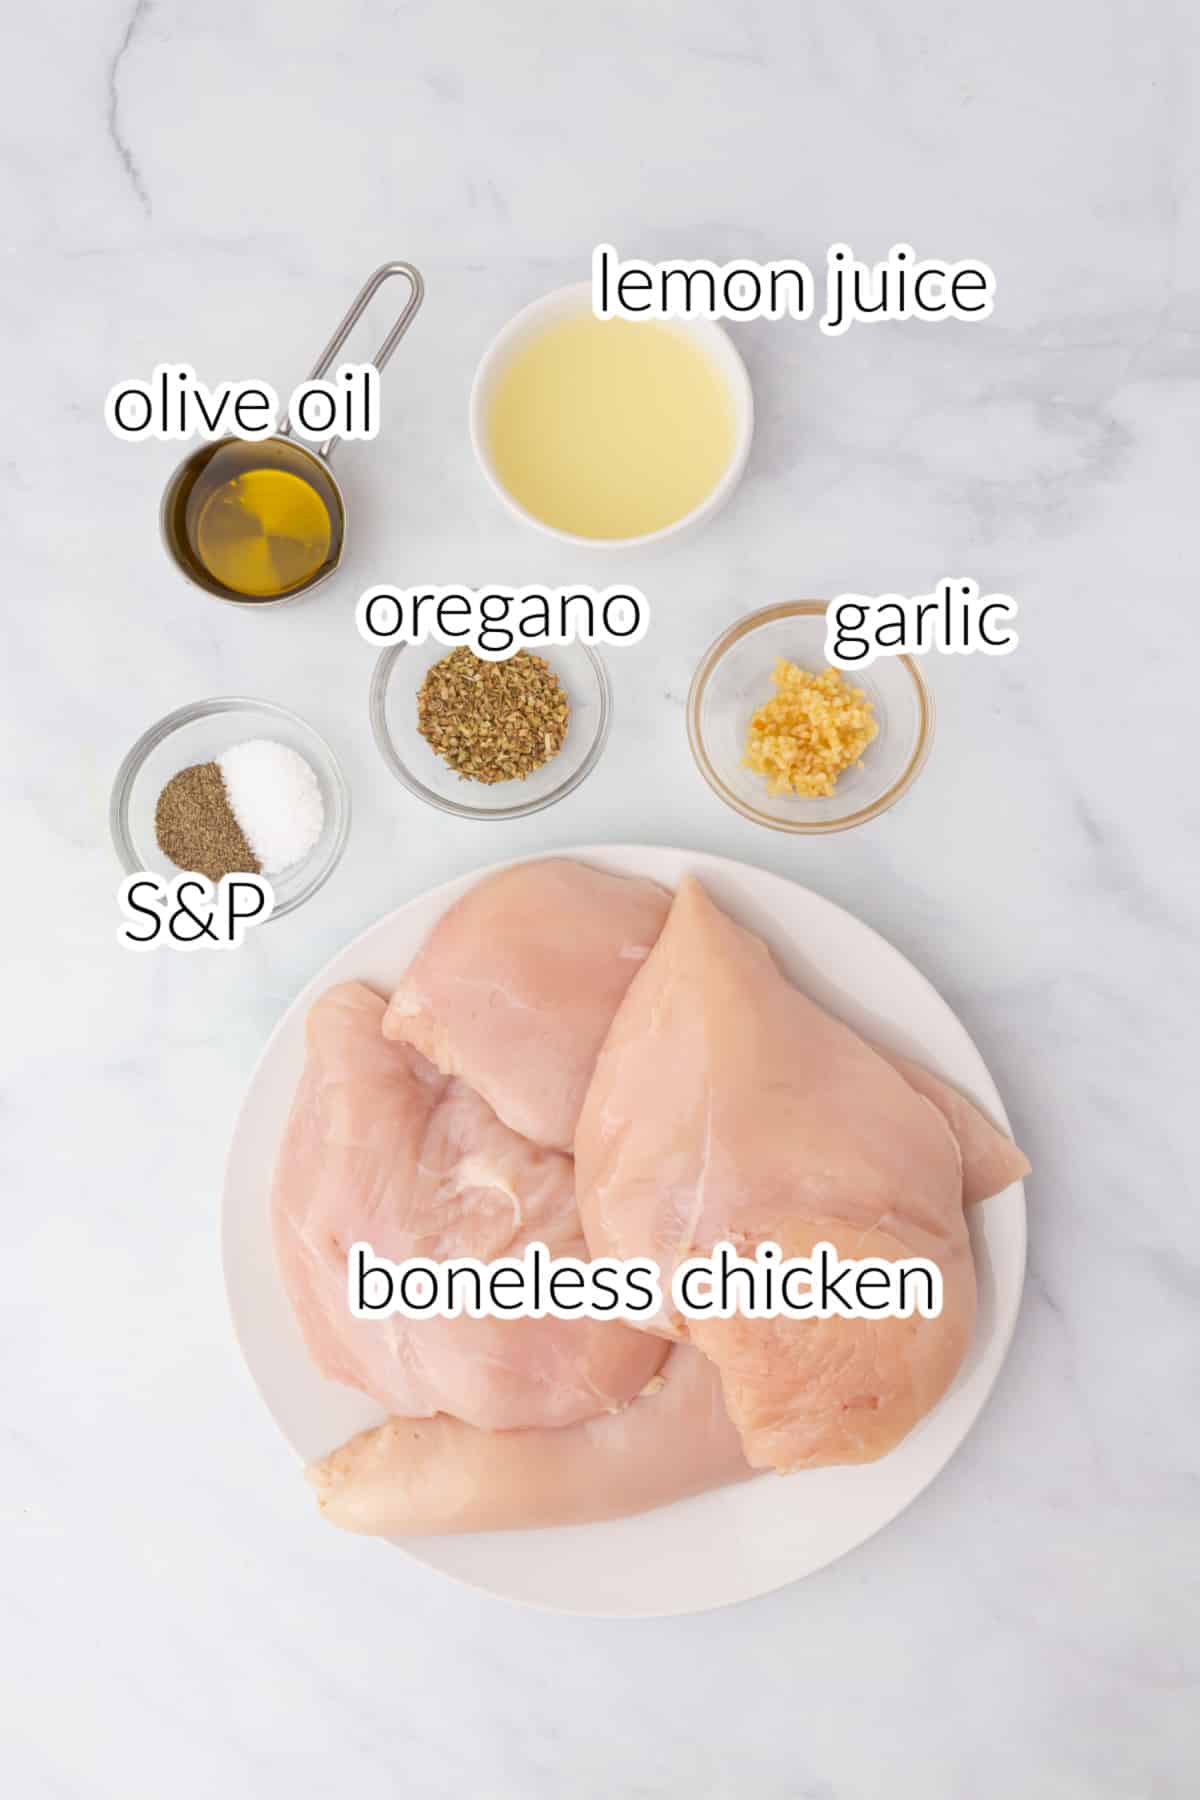 Oregano chicken ingredients on a white surface.